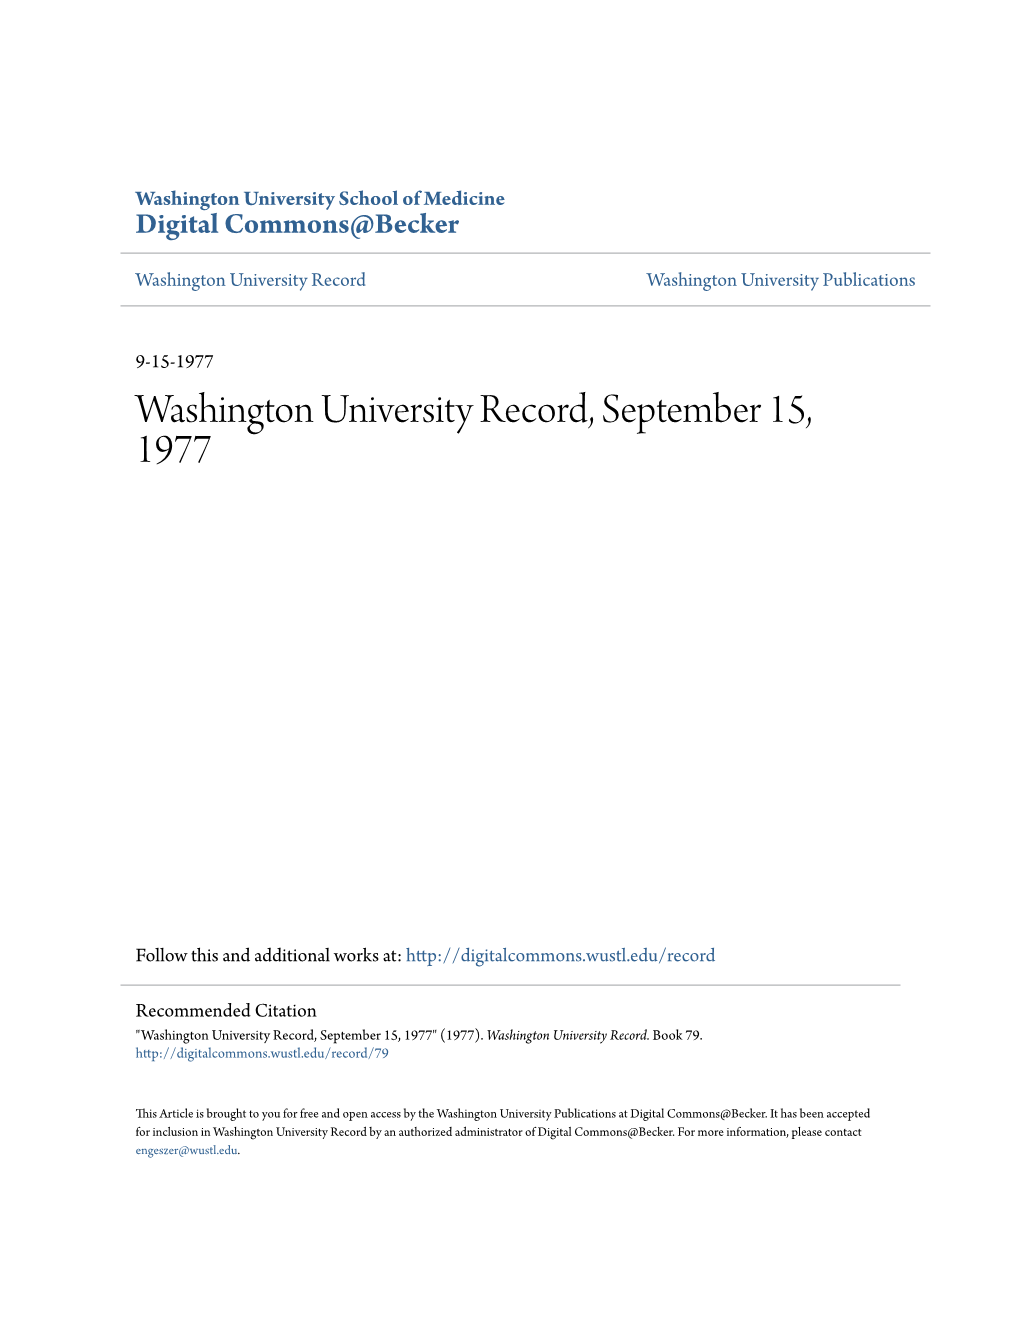 Washington University Record, September 15, 1977